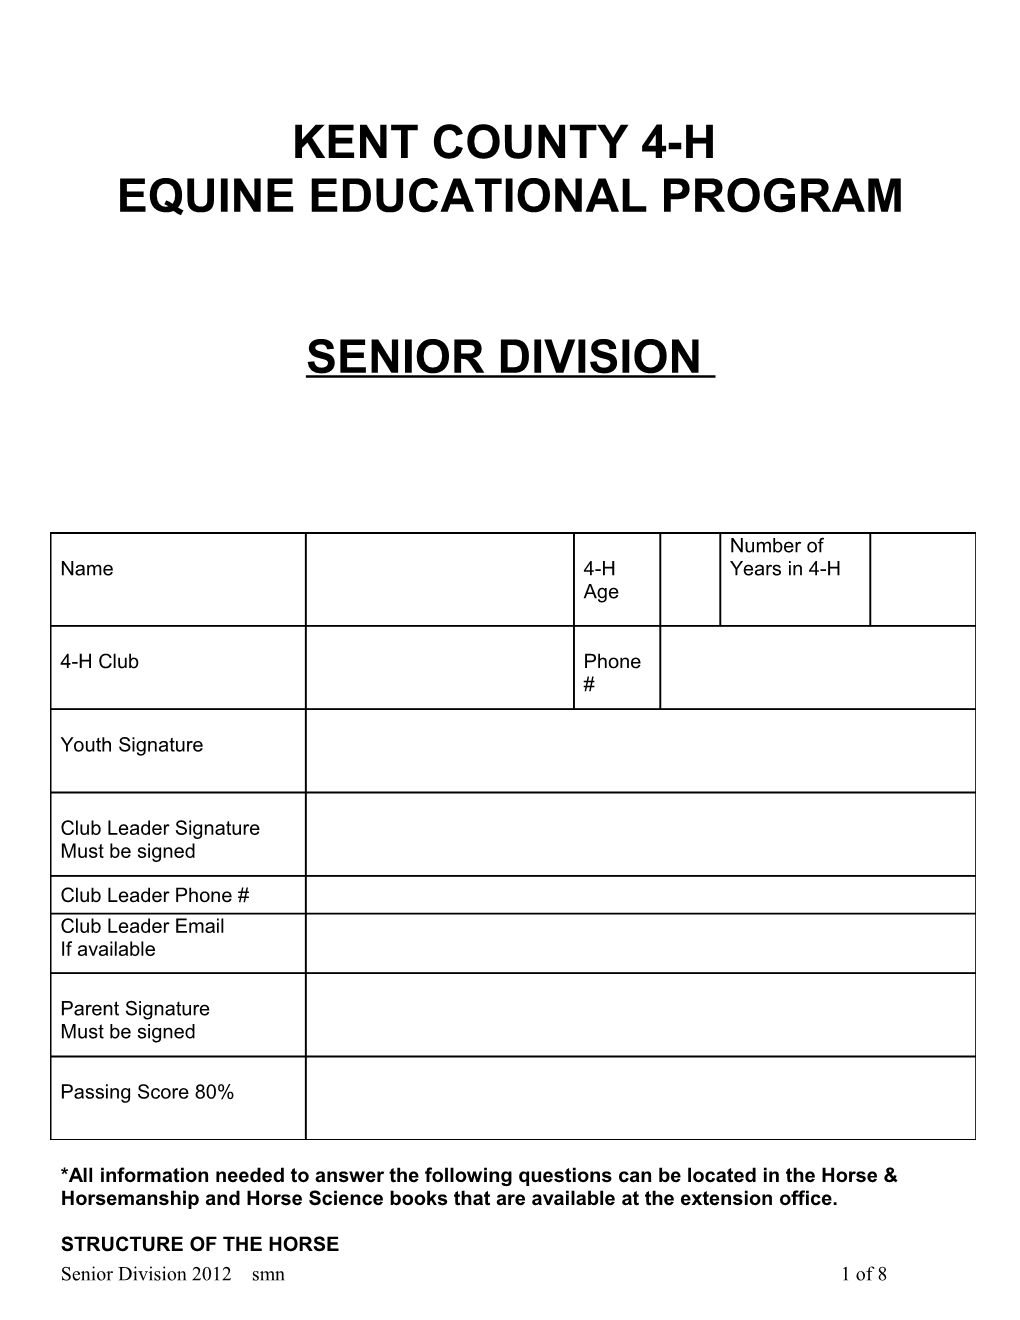 County 4-H Youth Horsemaster Program